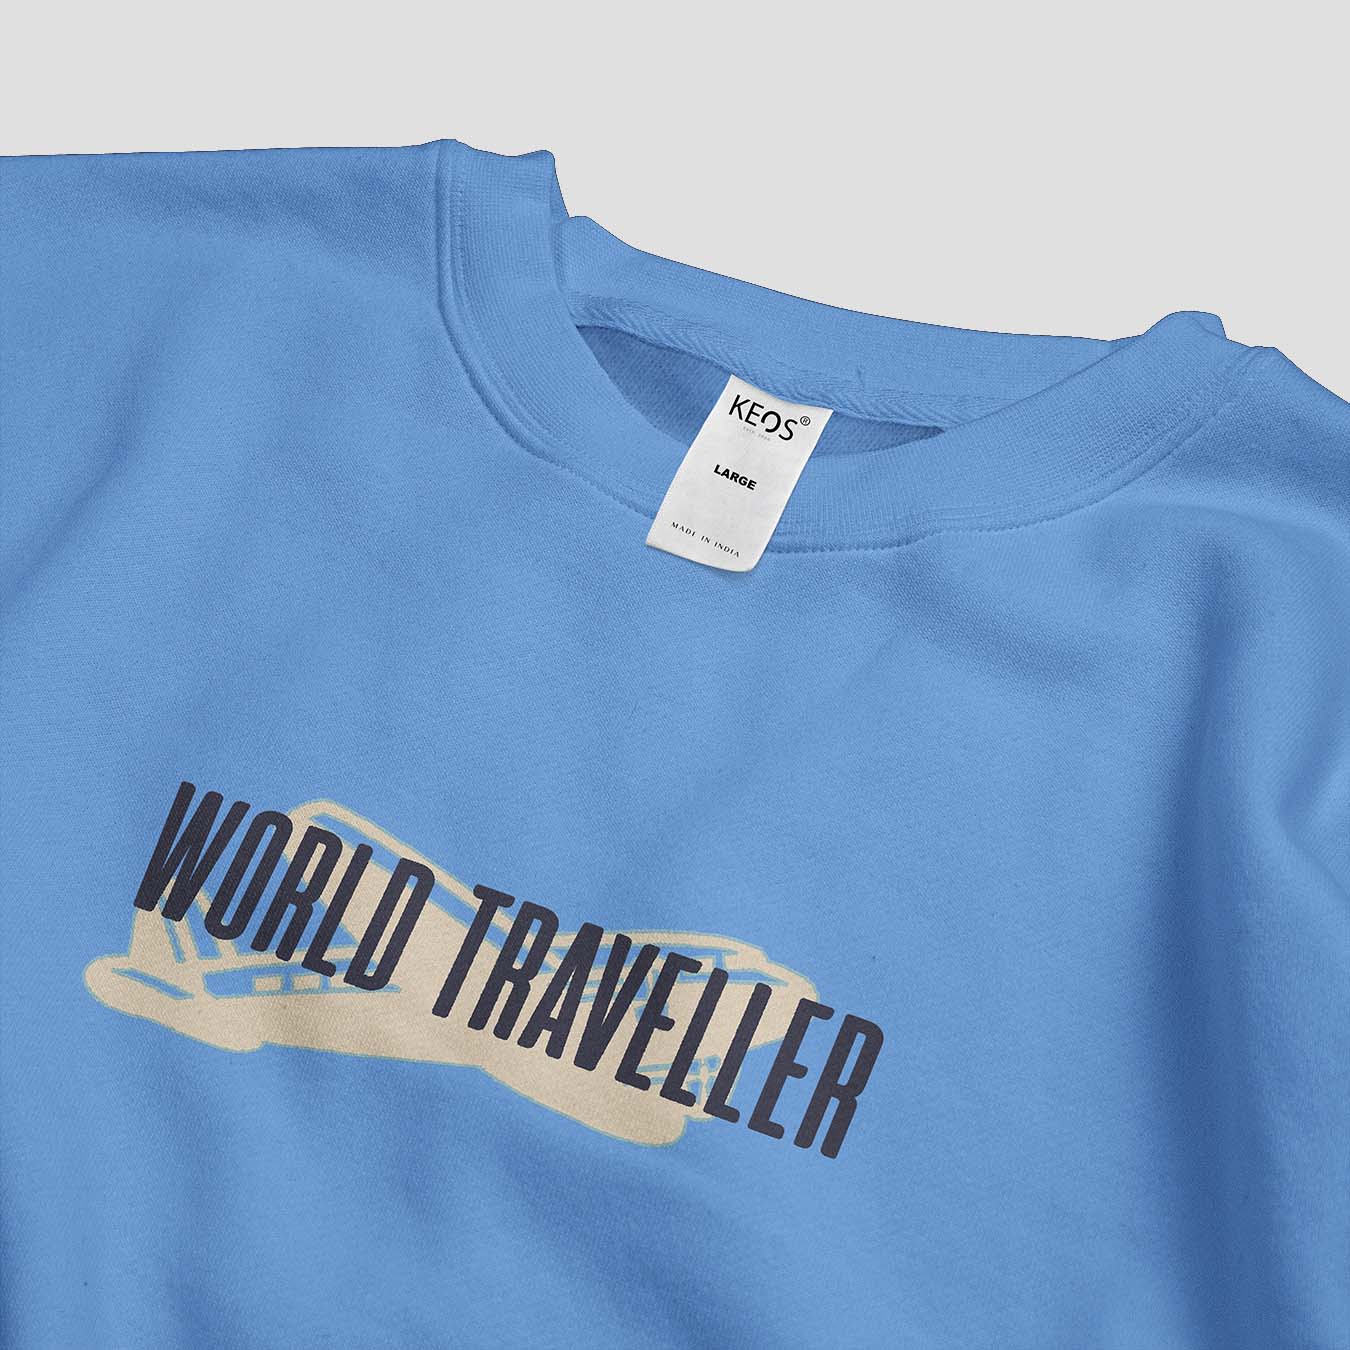 World Traveller Printed Sweatshirt - keos.life